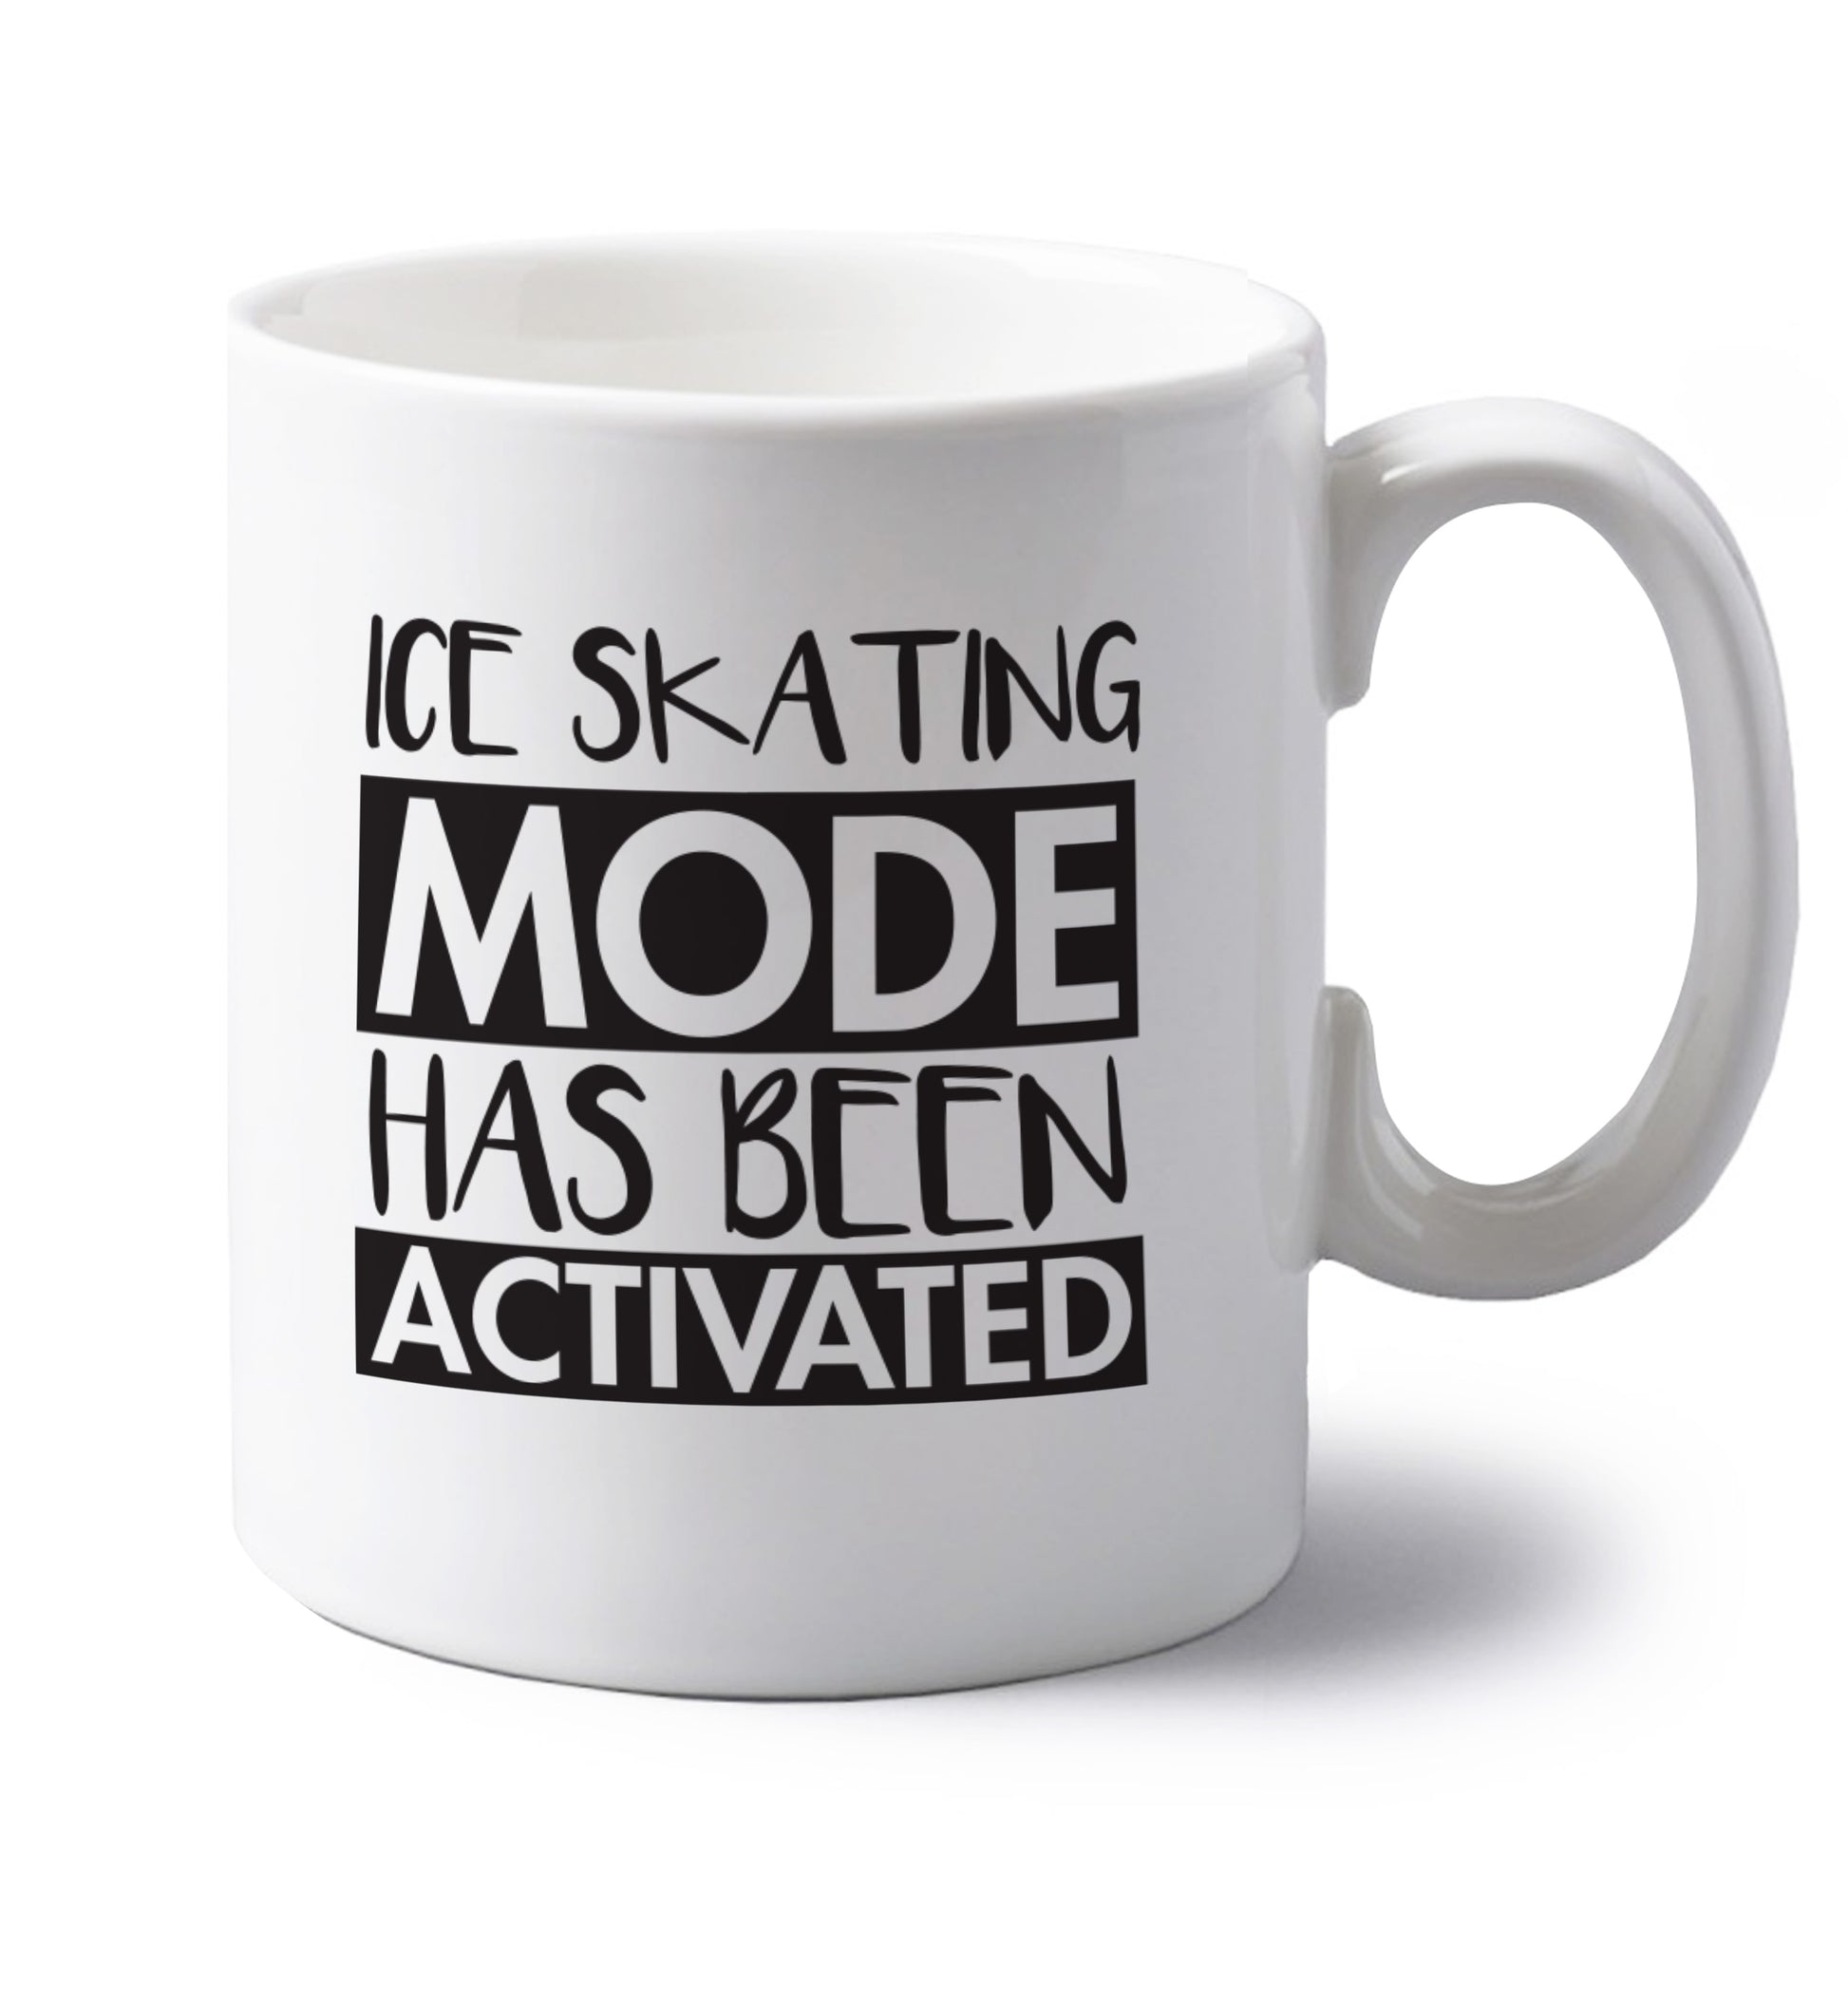 Ice skating mode activated left handed white ceramic mug 